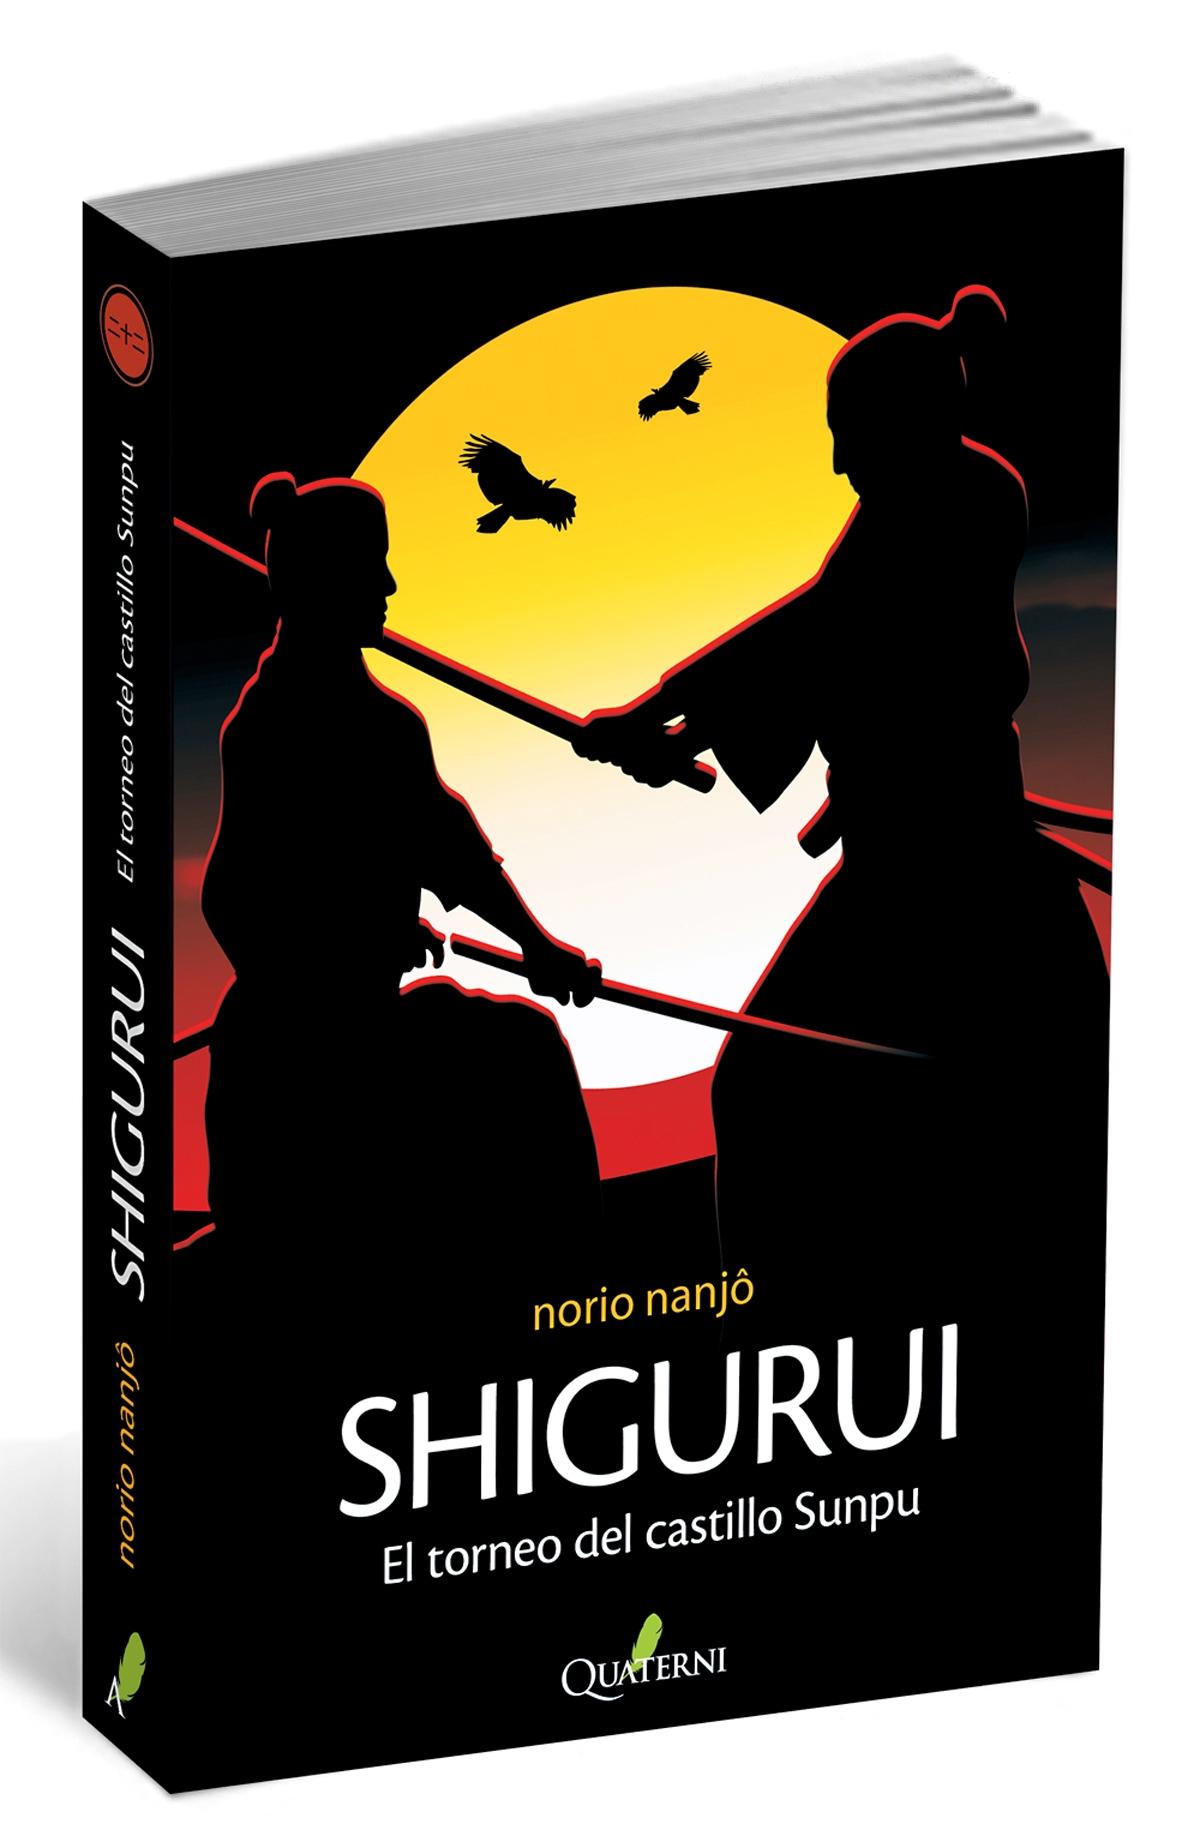 Shigurui "El torneo del castillo sunpu". 